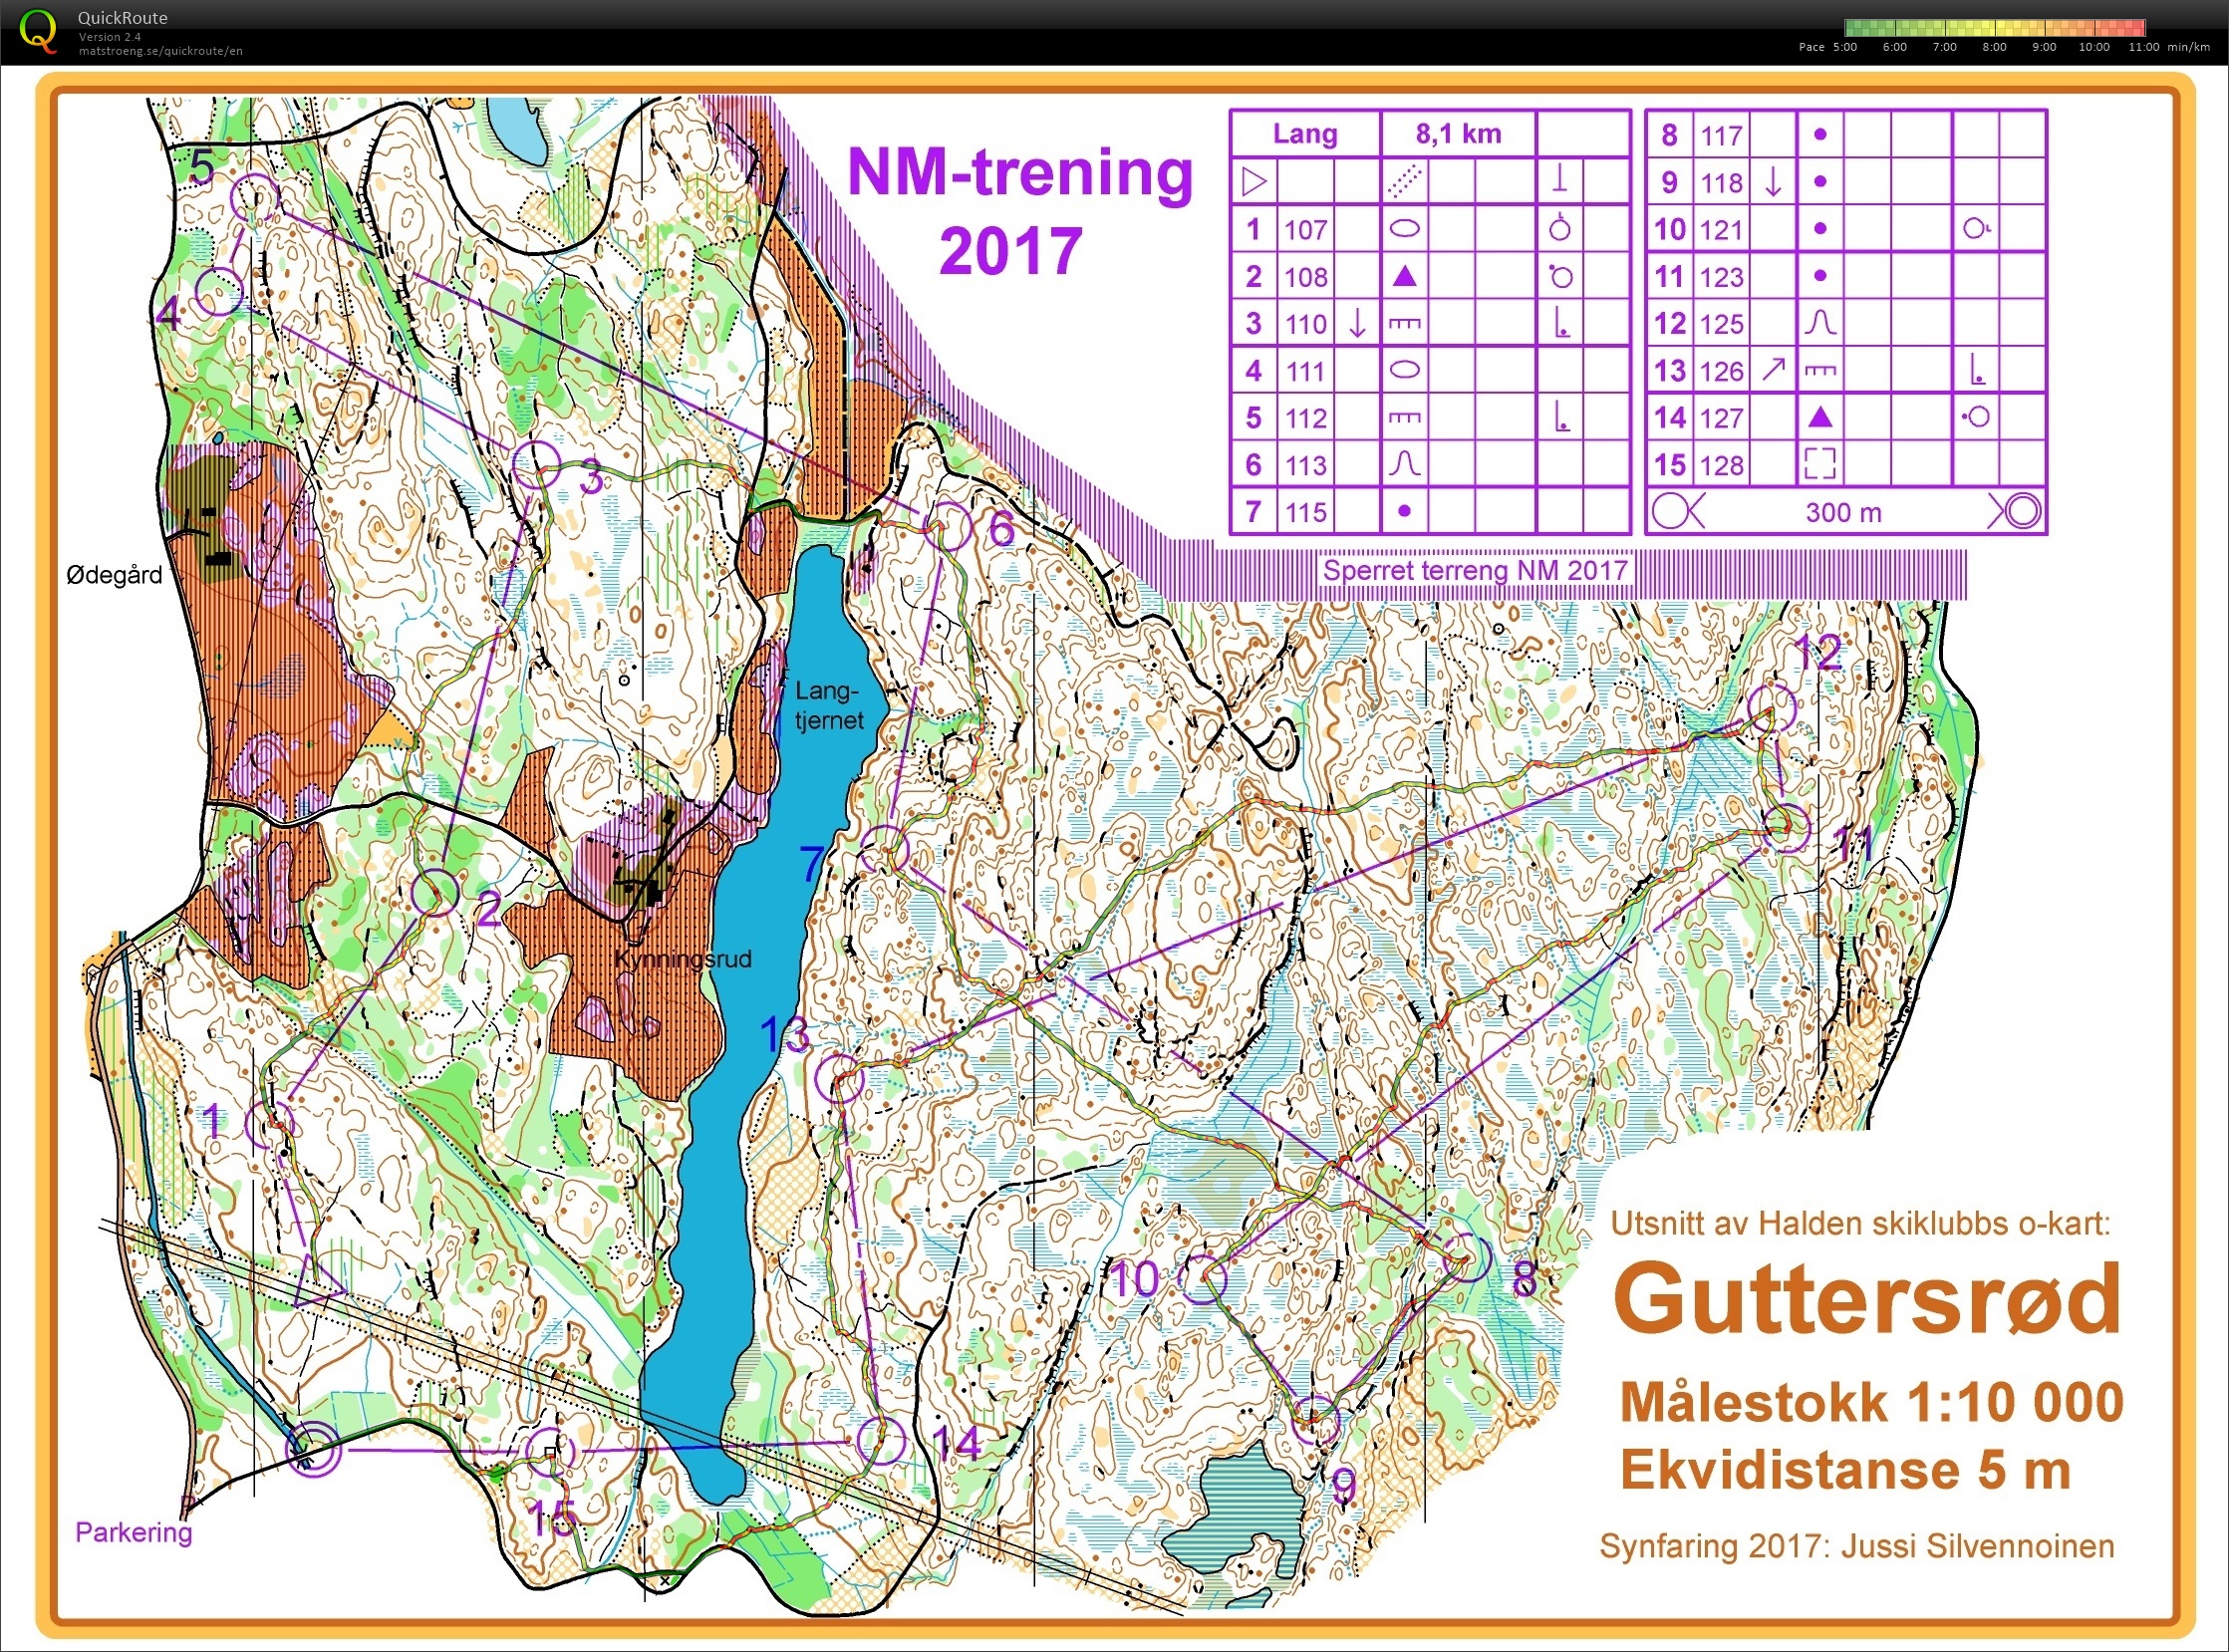 NM 2017 Training Package // Guttersrød S. LD (17/11/2017)